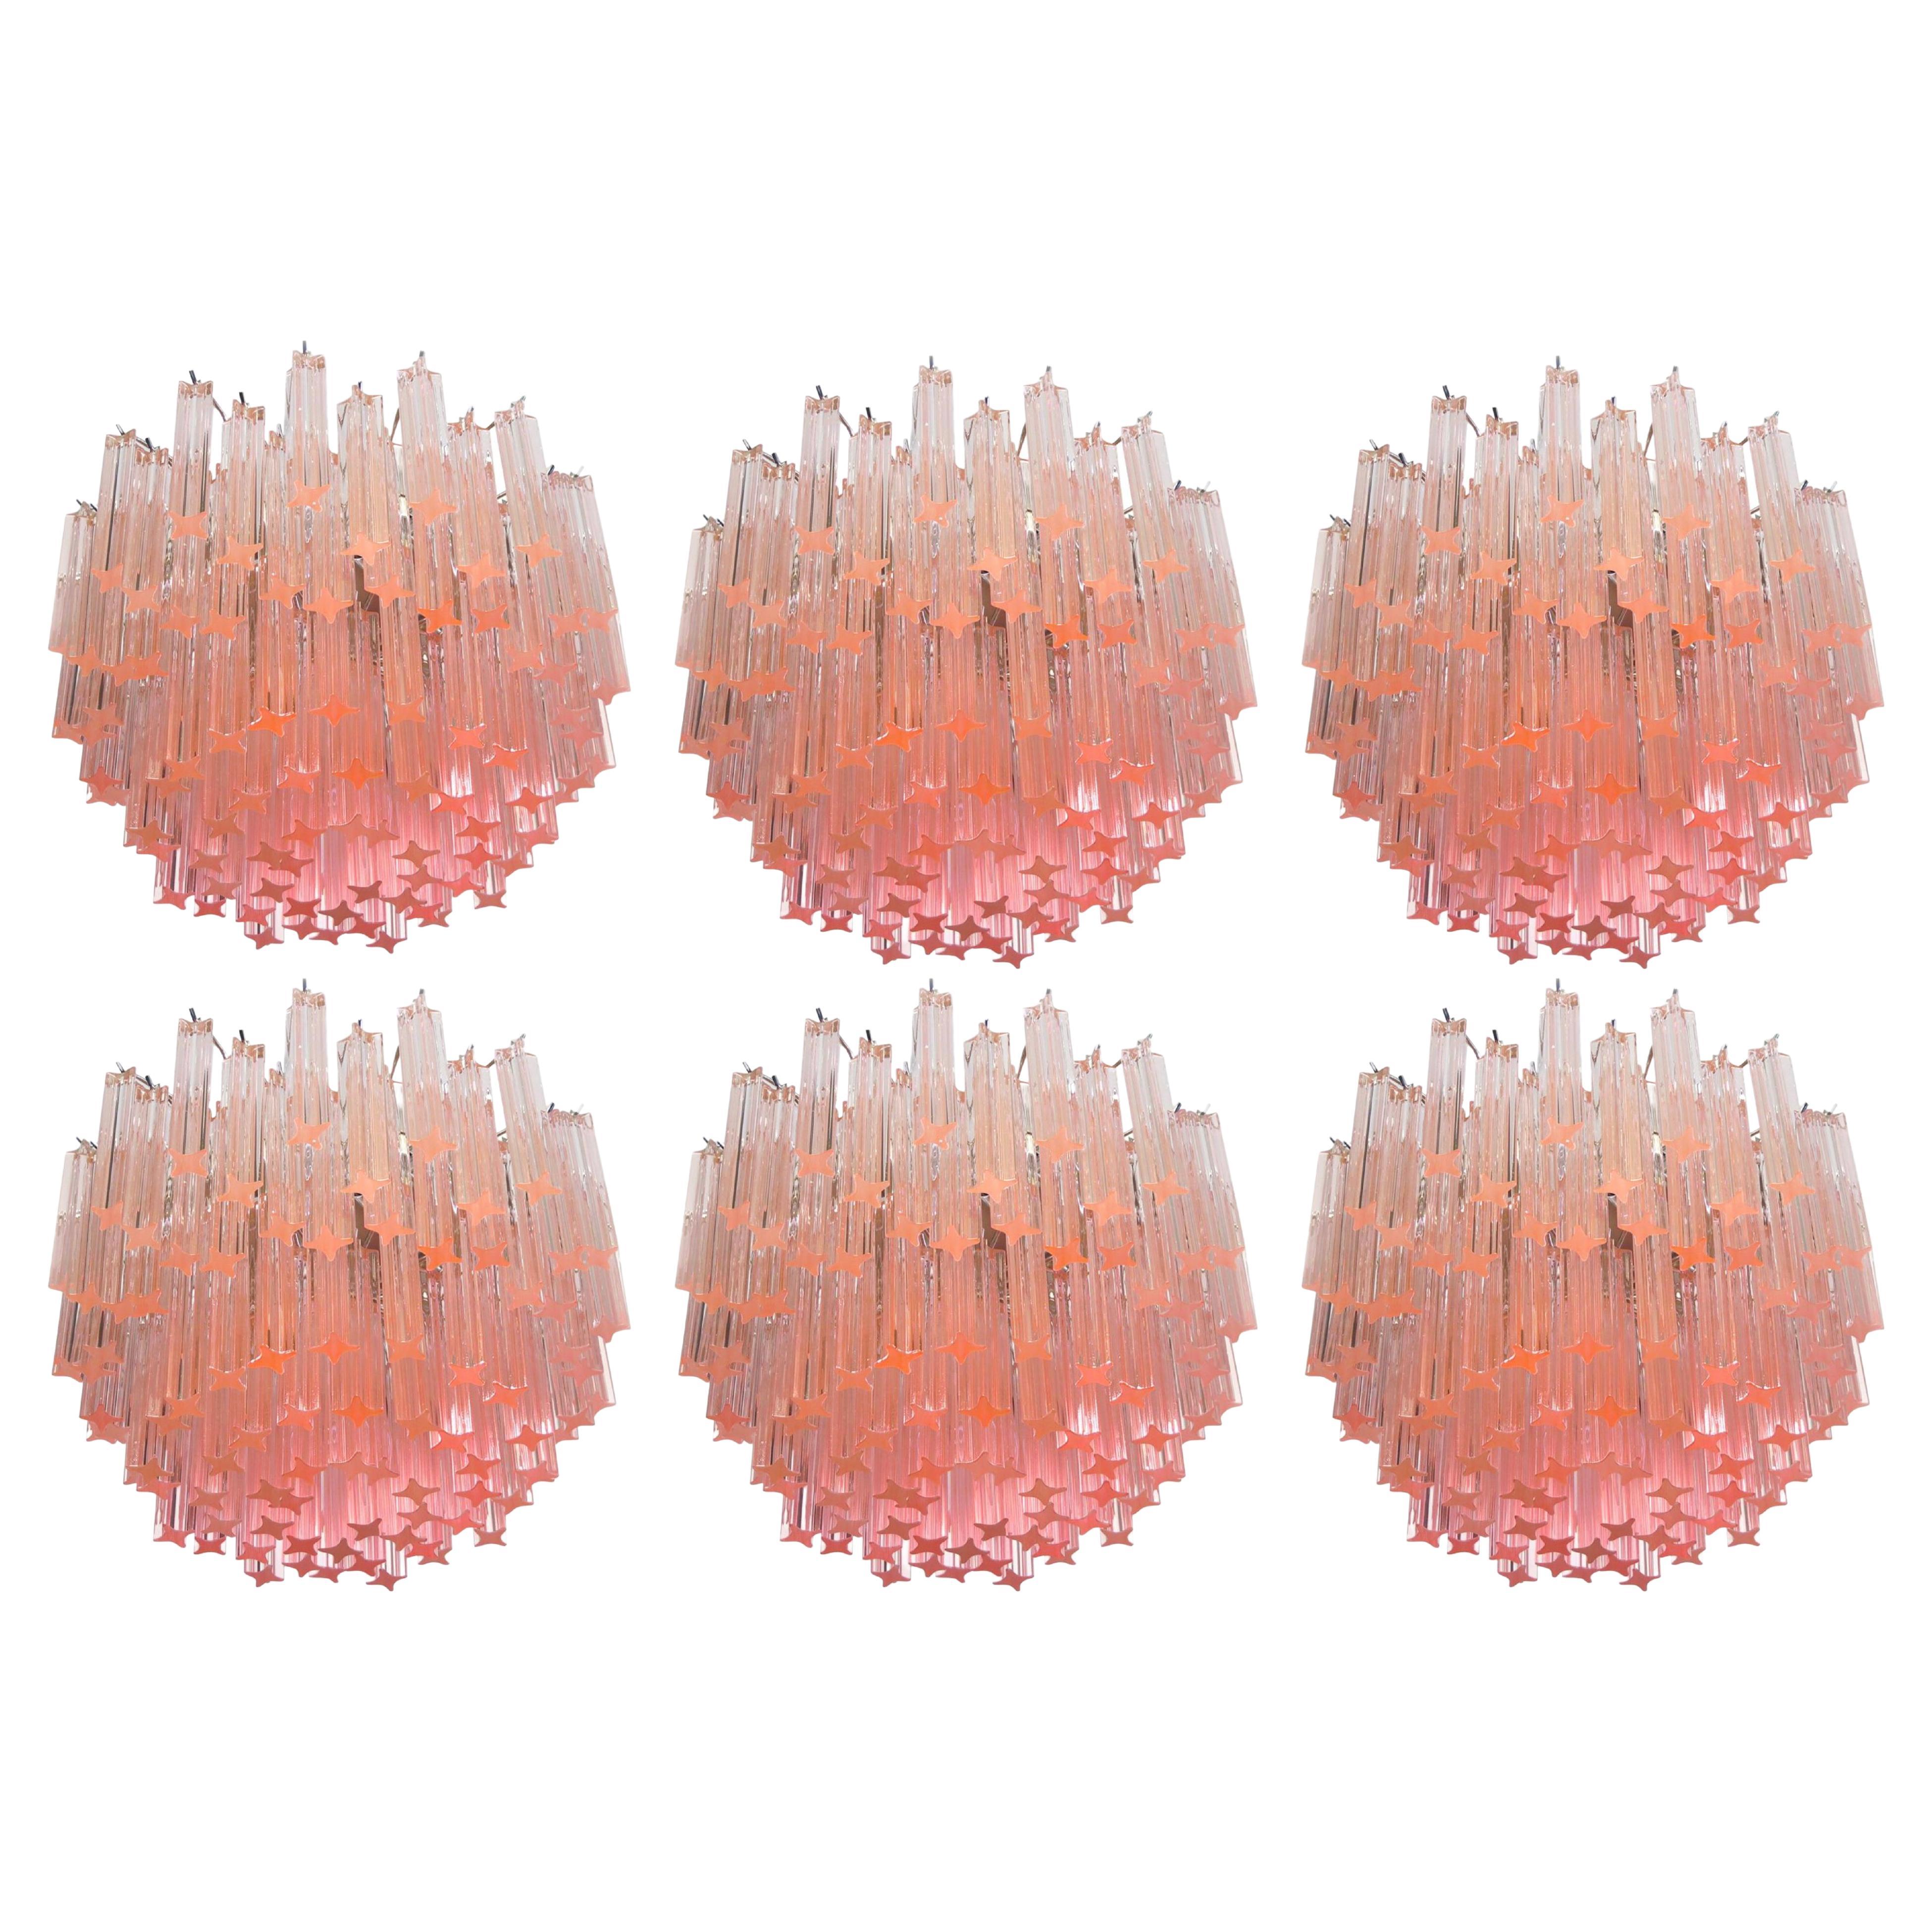 Sert 6 Italian Chandeliers Made by 107 Crystal Prism Quadriedri, Murano